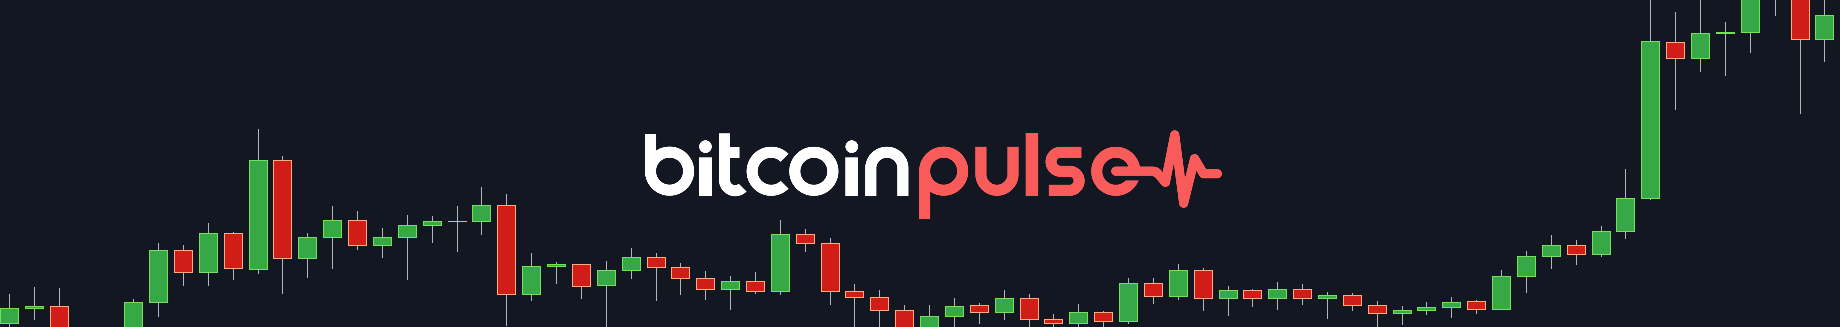 Dogecoin + Bitcoin Price and Fundamentals - Bitcoin Pulse #109